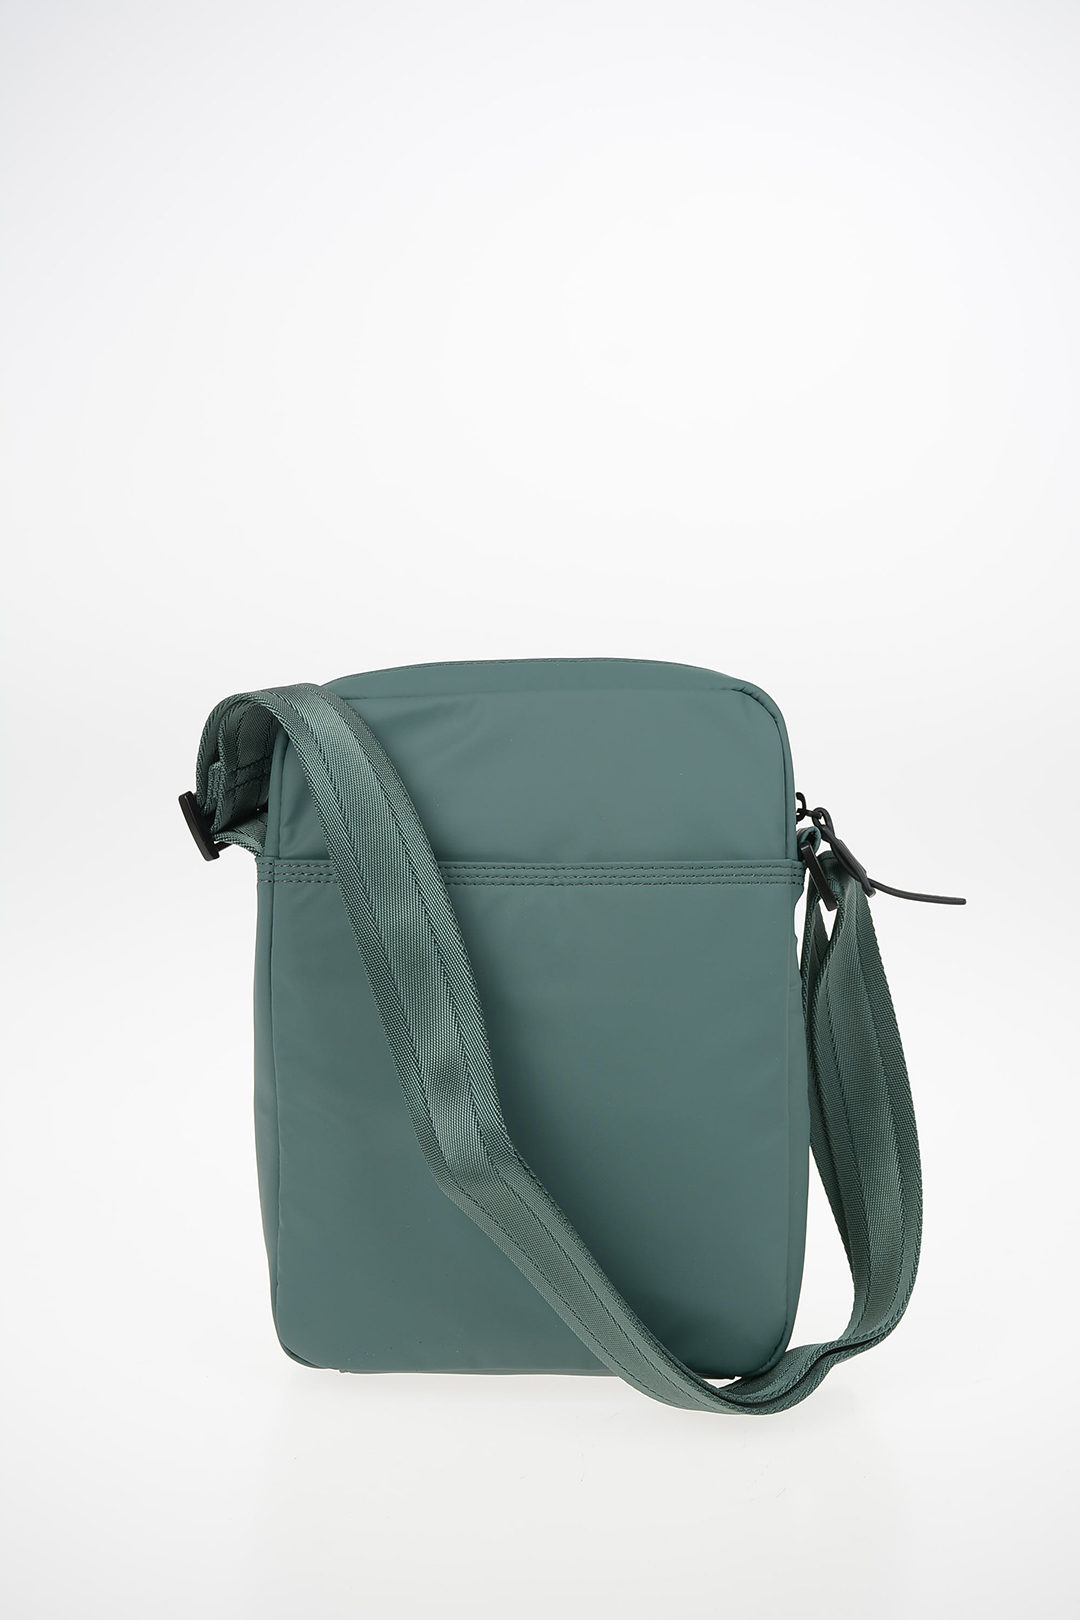 Amy Small Cross Body Zip Top Bag - Grey Meadow - Sallyann's Handmade Bags